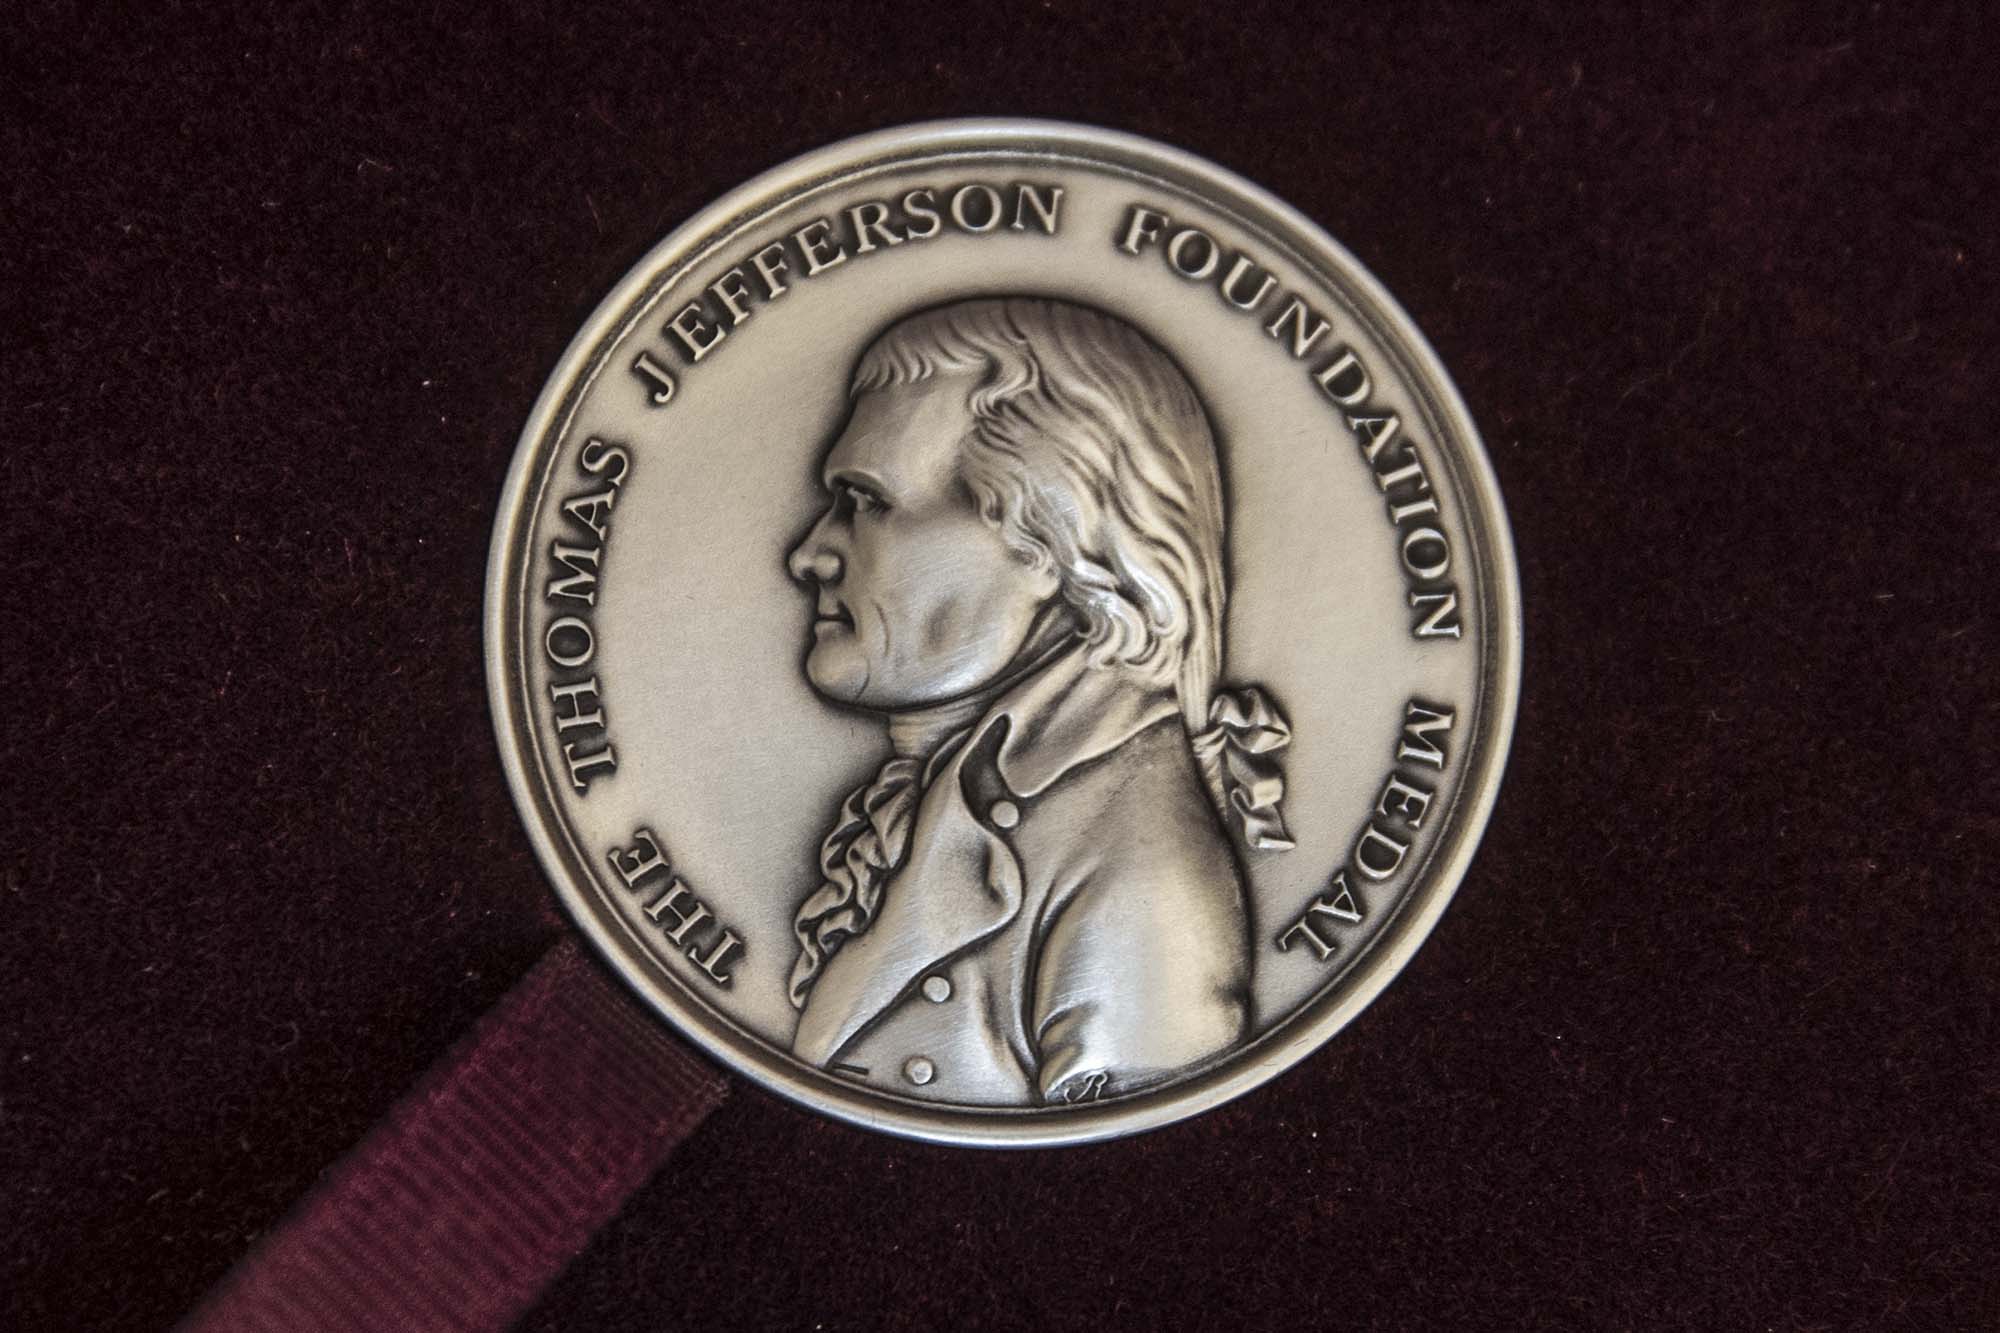 Thomas Jefferson Foundation Medal Coin